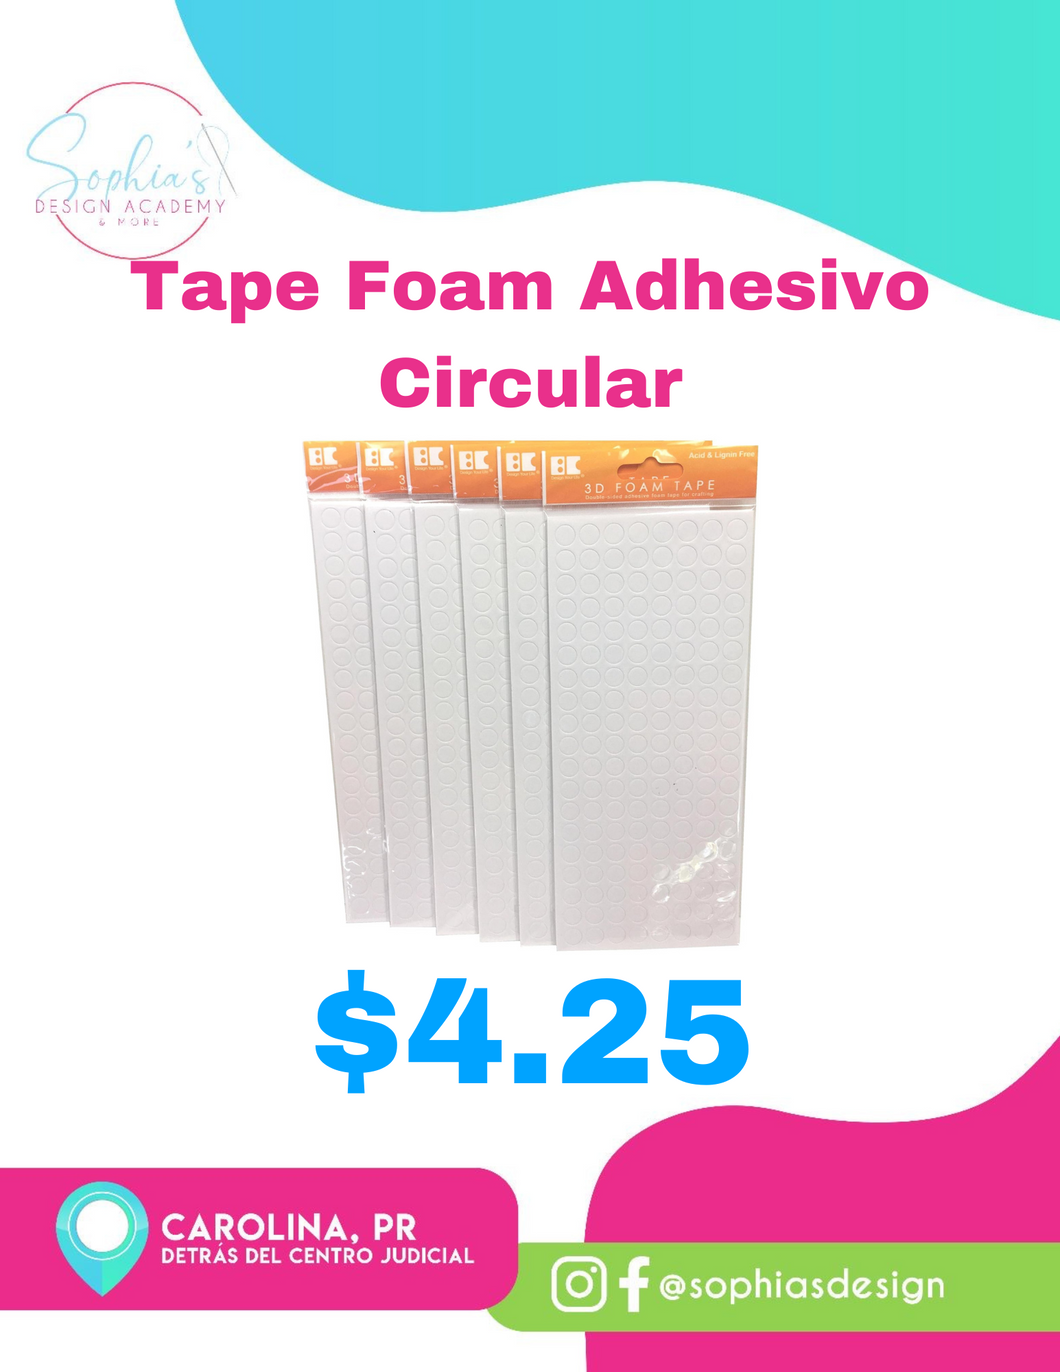 Tape Foam Adhesivo Circular